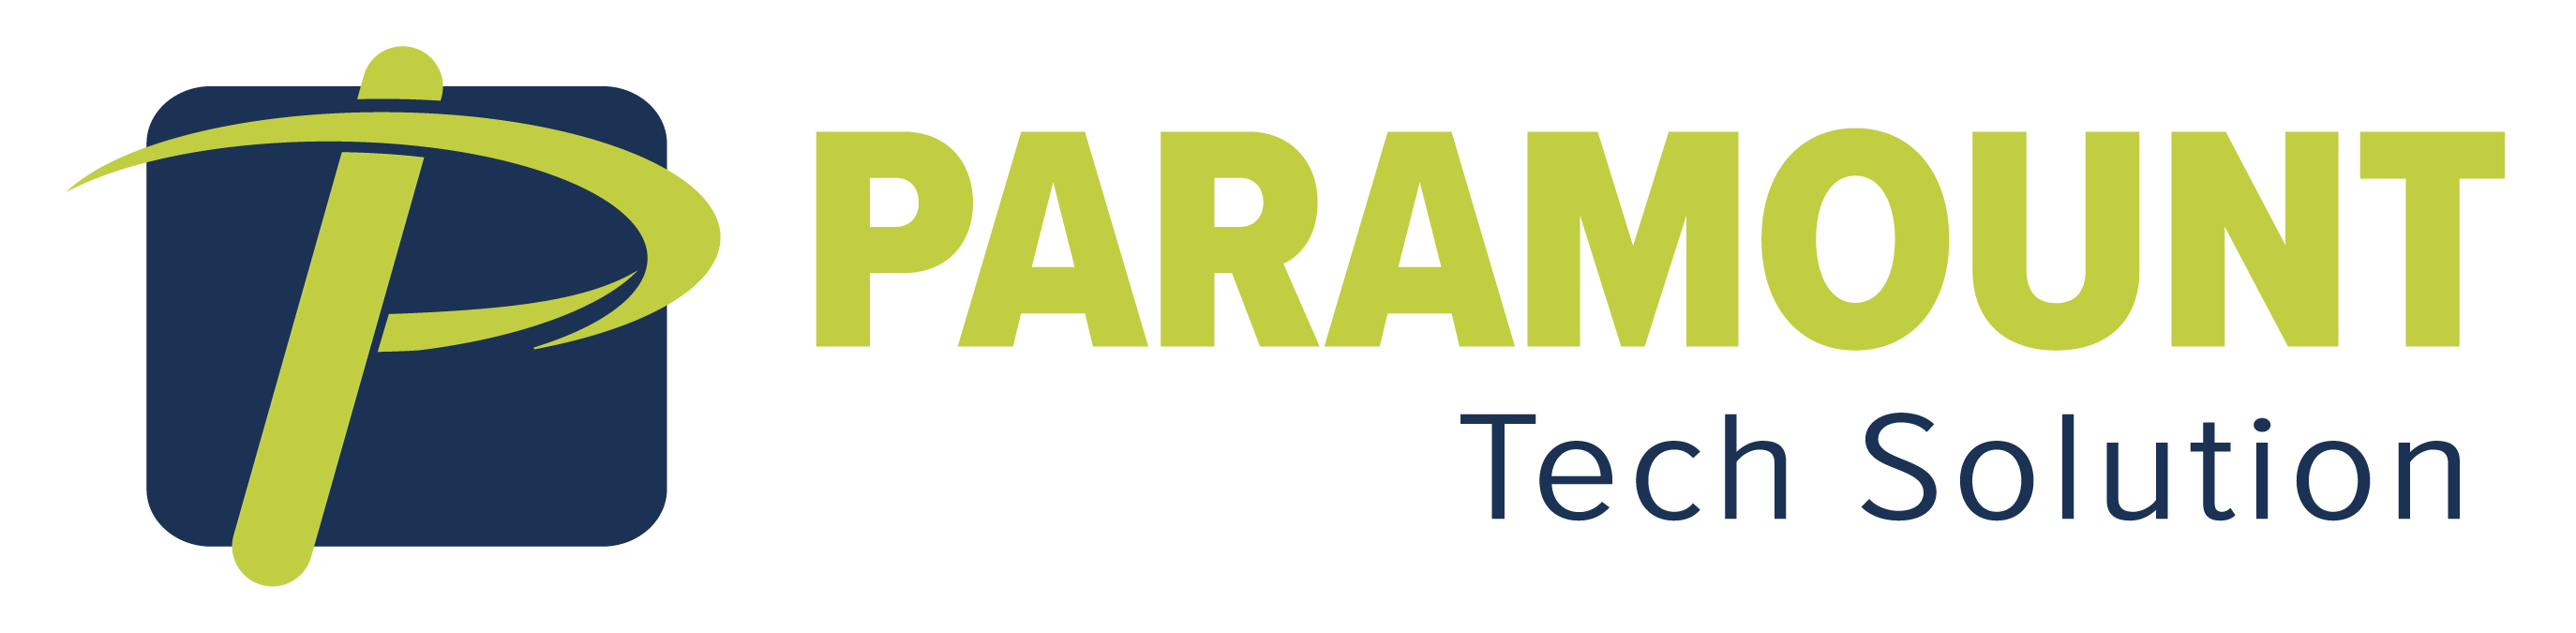 Paramount Tech Solution Logo